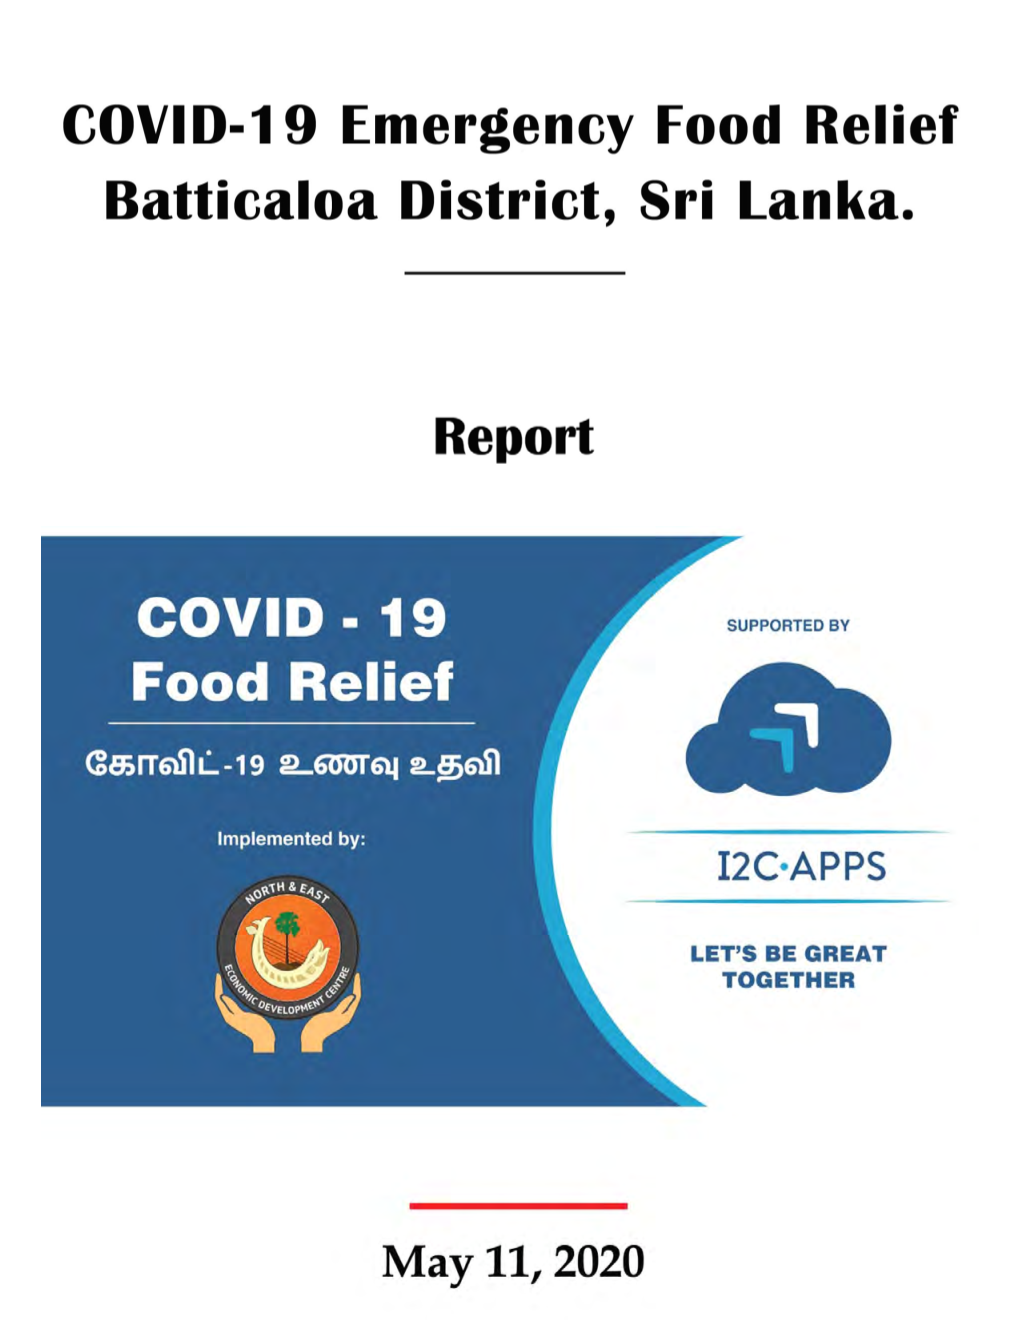 COVID-19 Emergency Food Relief | Batticaloa District, Sri Lanka